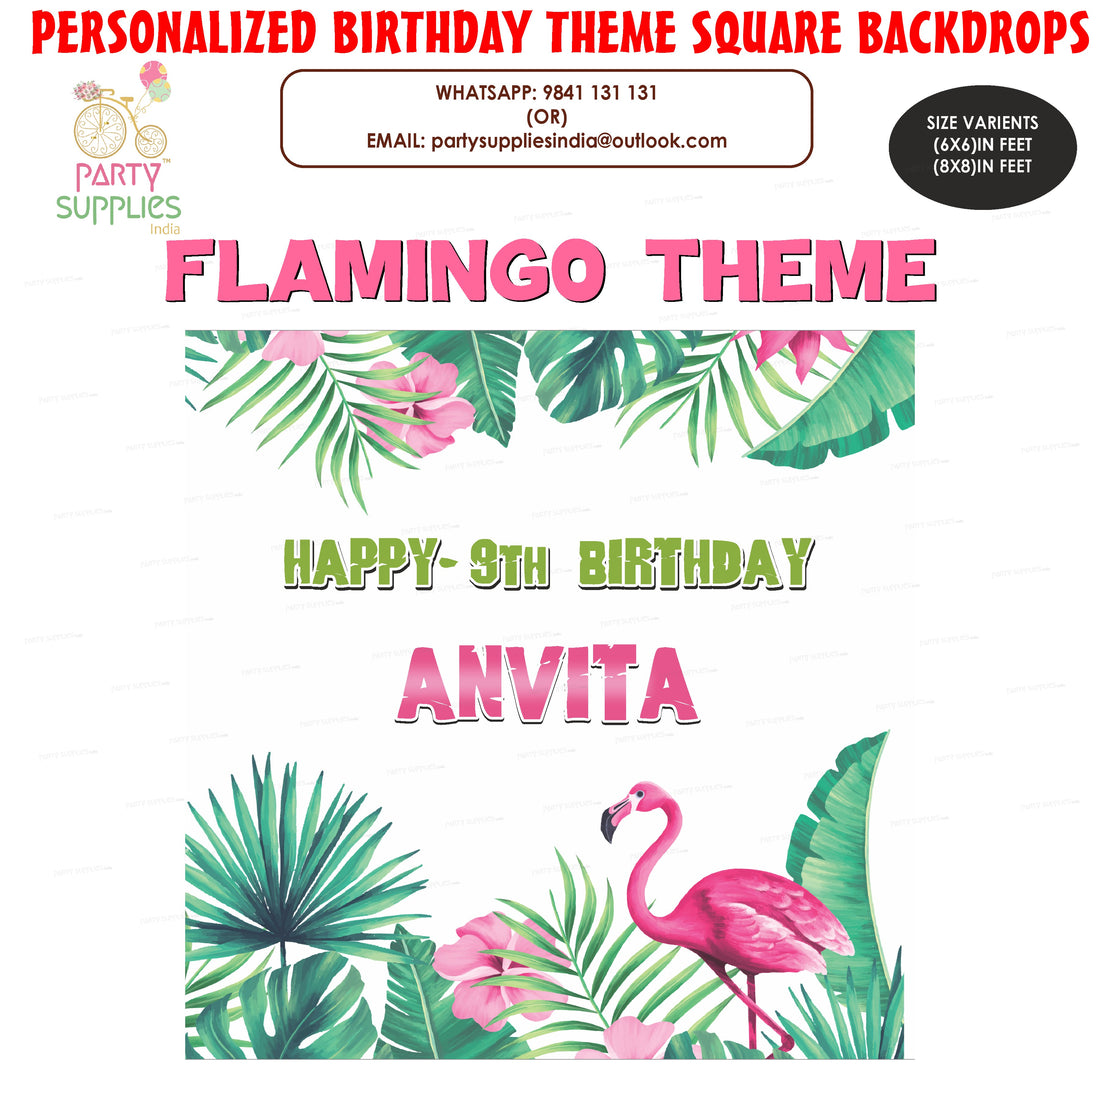 PSI Flamingo Theme Square Backdrop